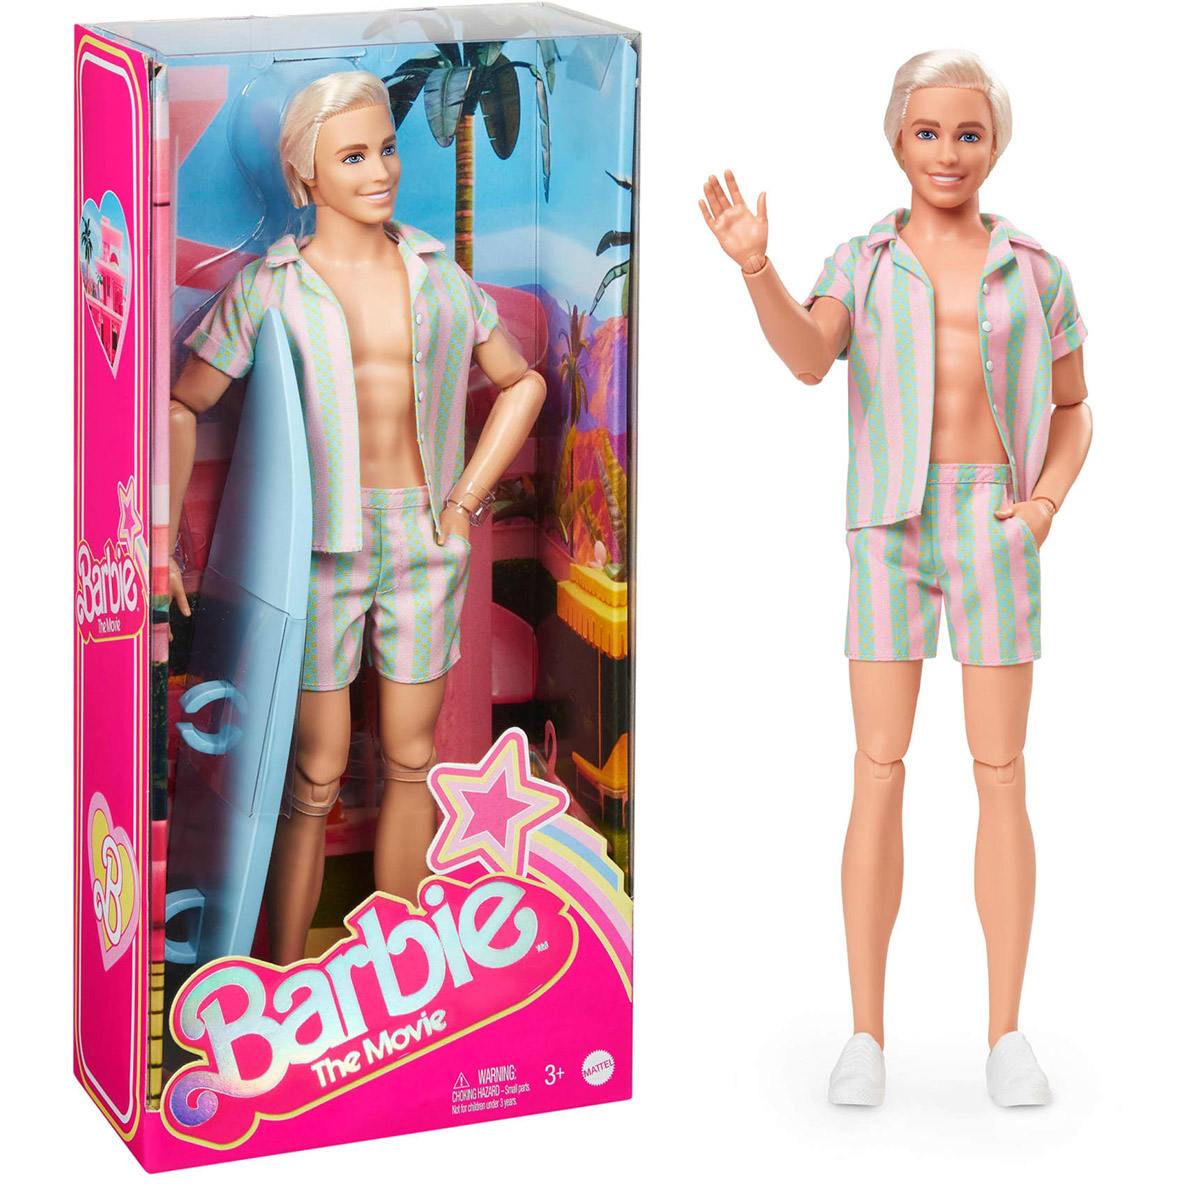 Barbie(R) The Movie Ken Doll